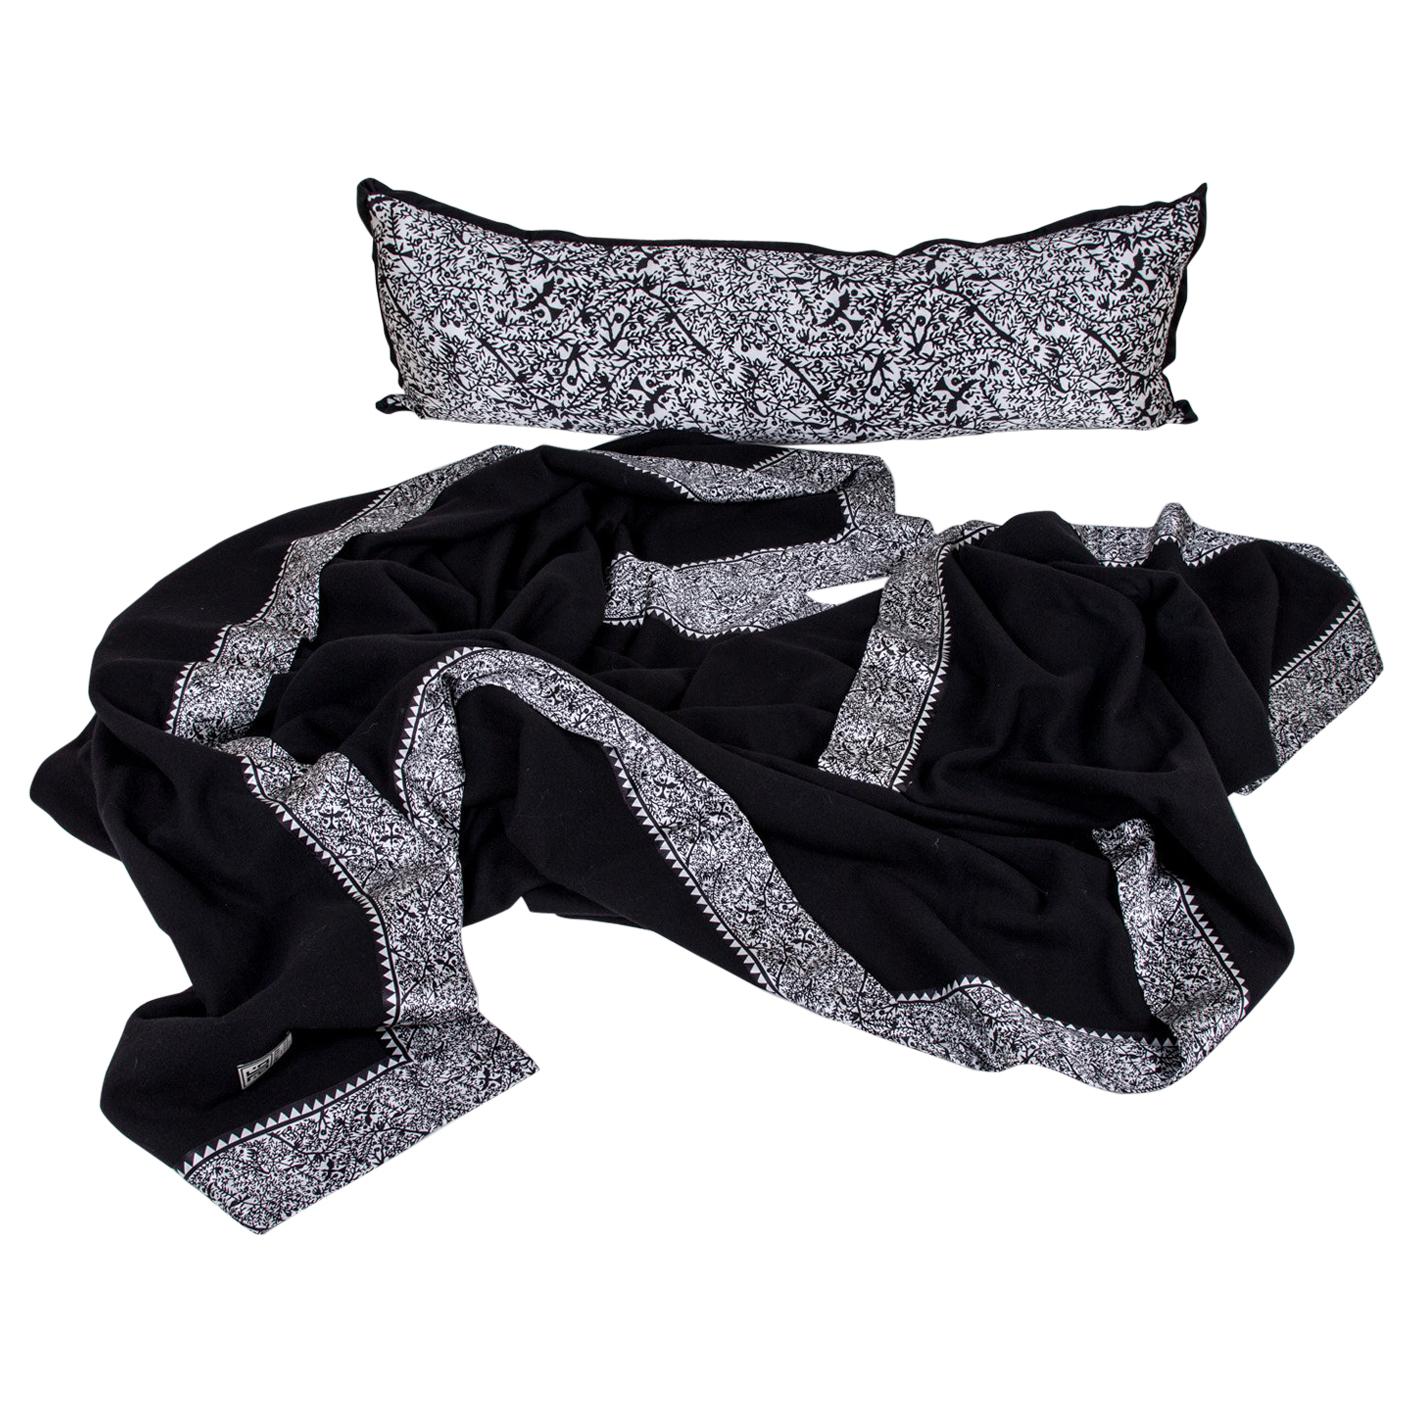 Custom Designed Luxury 100% Merino Wool Emilie King Blanket with Body Pillow For Sale